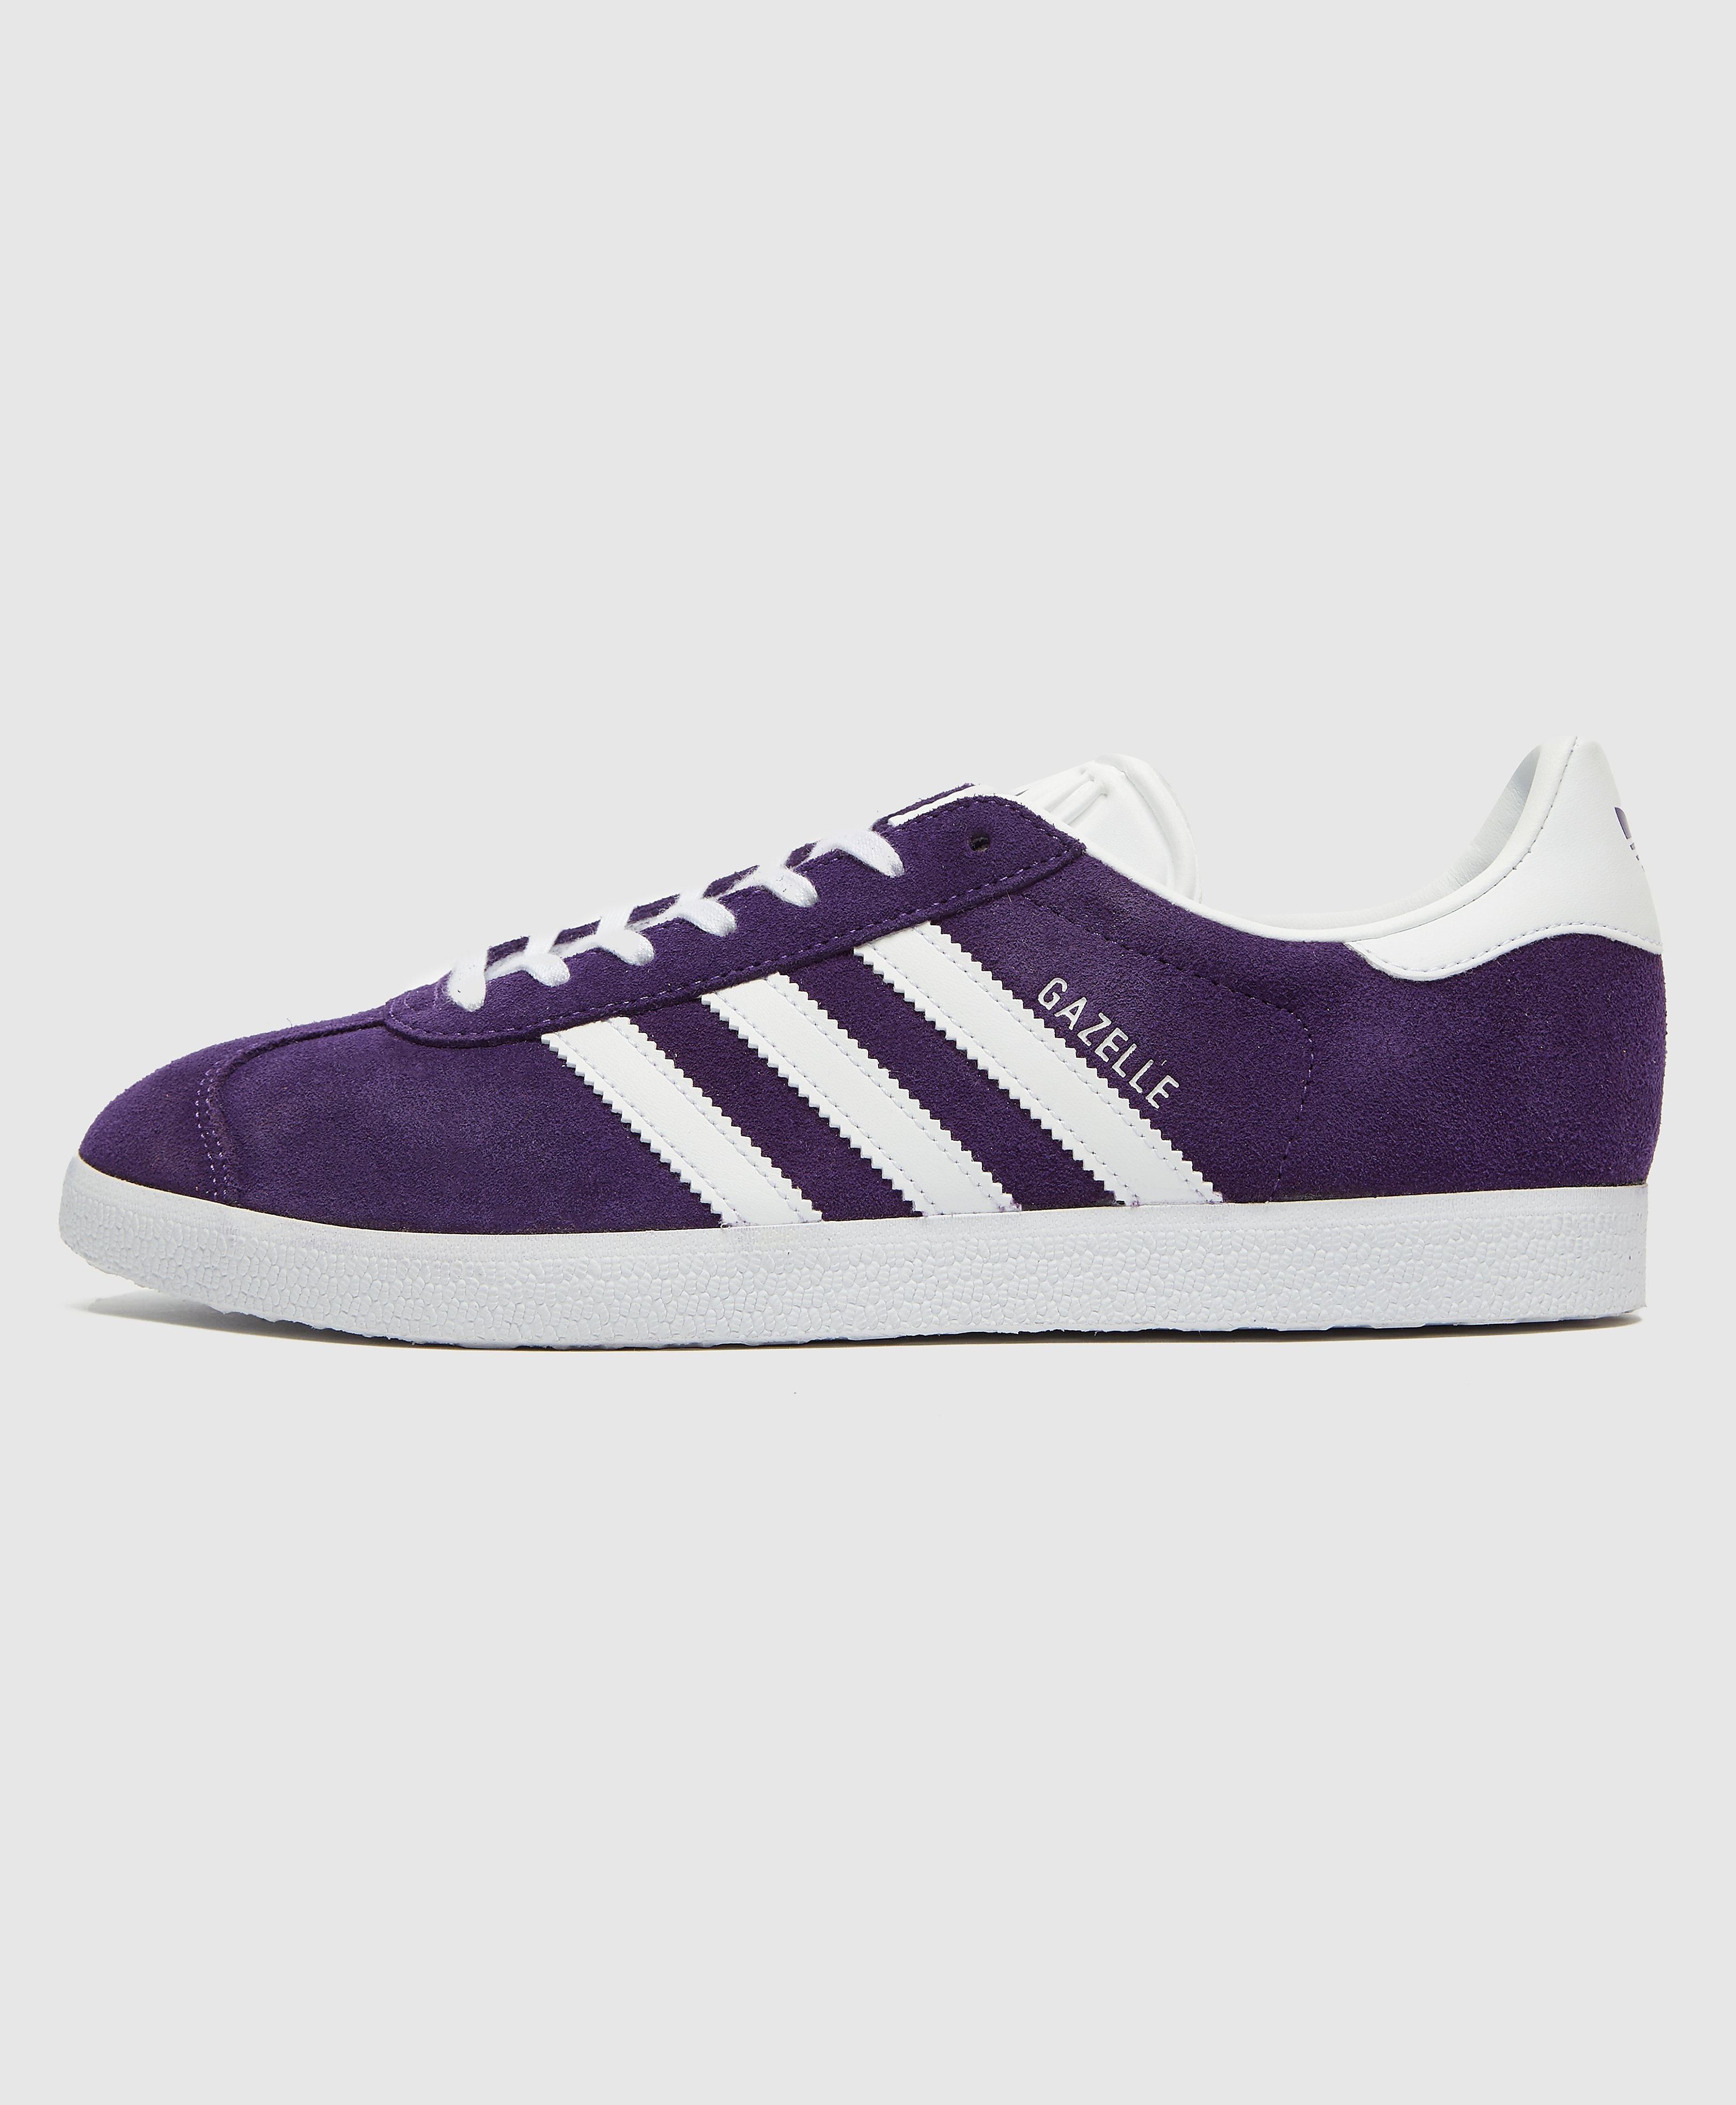 Men's adidas Originals Gazelle Trainers - Purple/White, Purple/White product